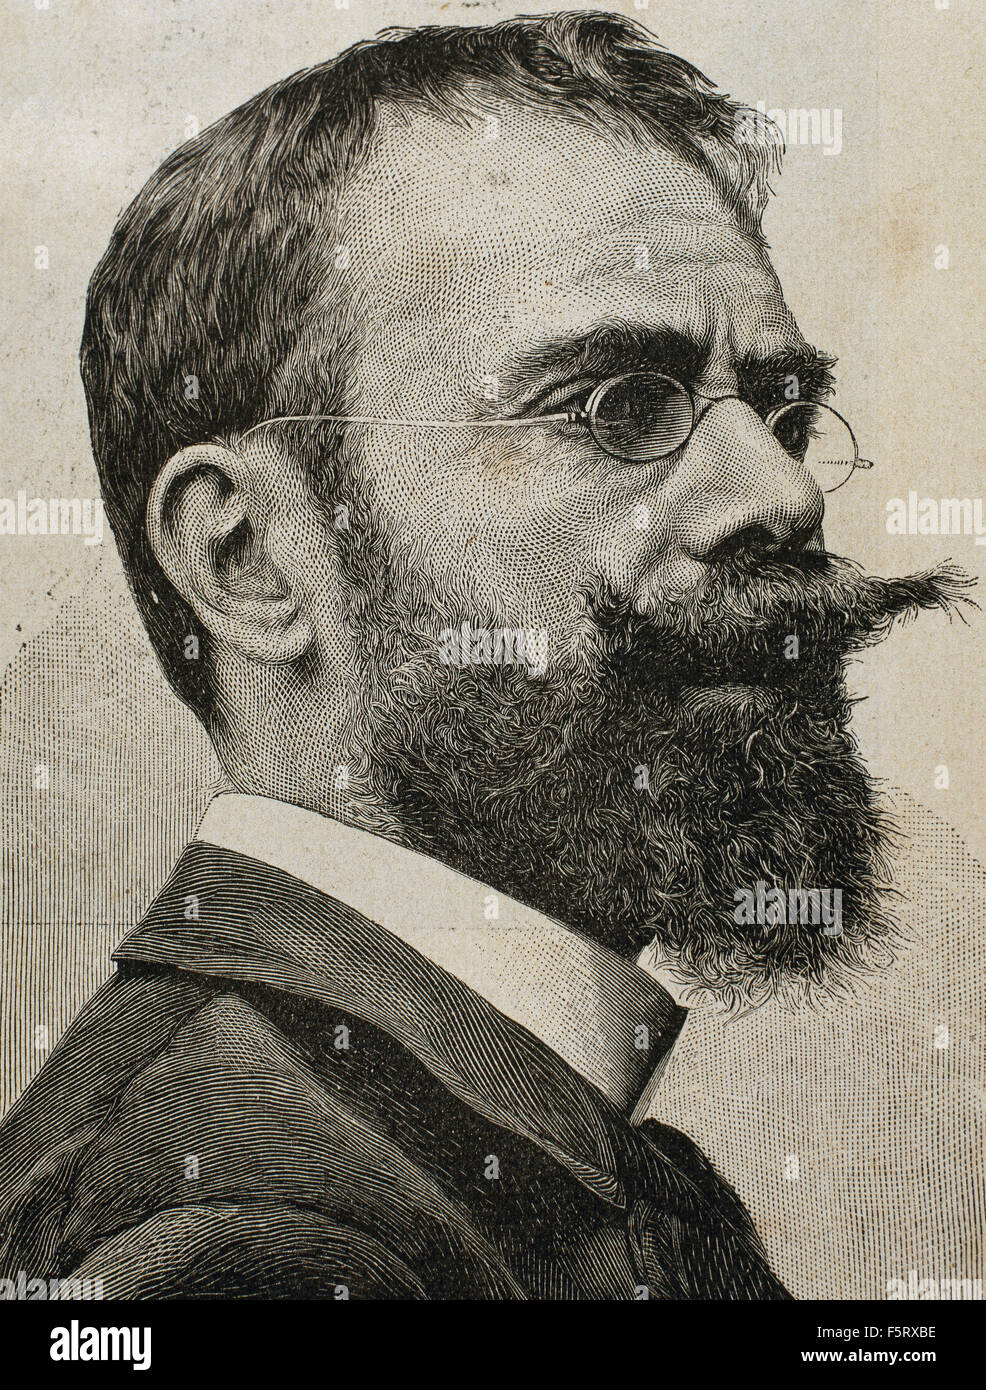 Francisco Pradilla Ortiz (1848-1921). Spanischer Maler. Porträt. Kupferstich, 19. Jahrhundert. Stockfoto